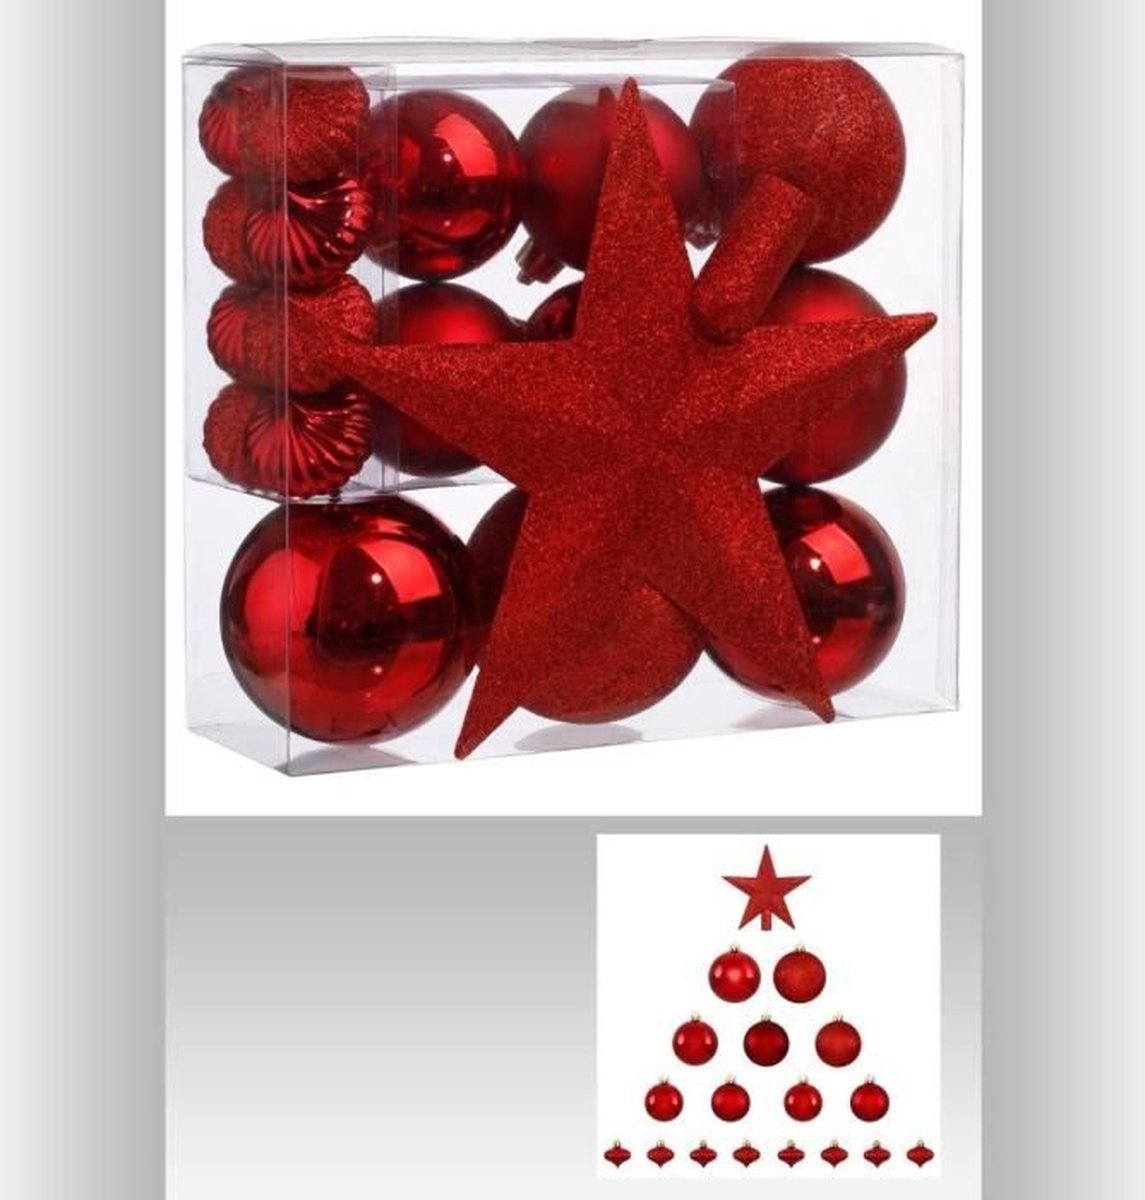 Kerstballenset 18 delig met kerstster rood - 18 stuks - Kerstbal - Kerstster - Kerstversiering - Roodkleurig